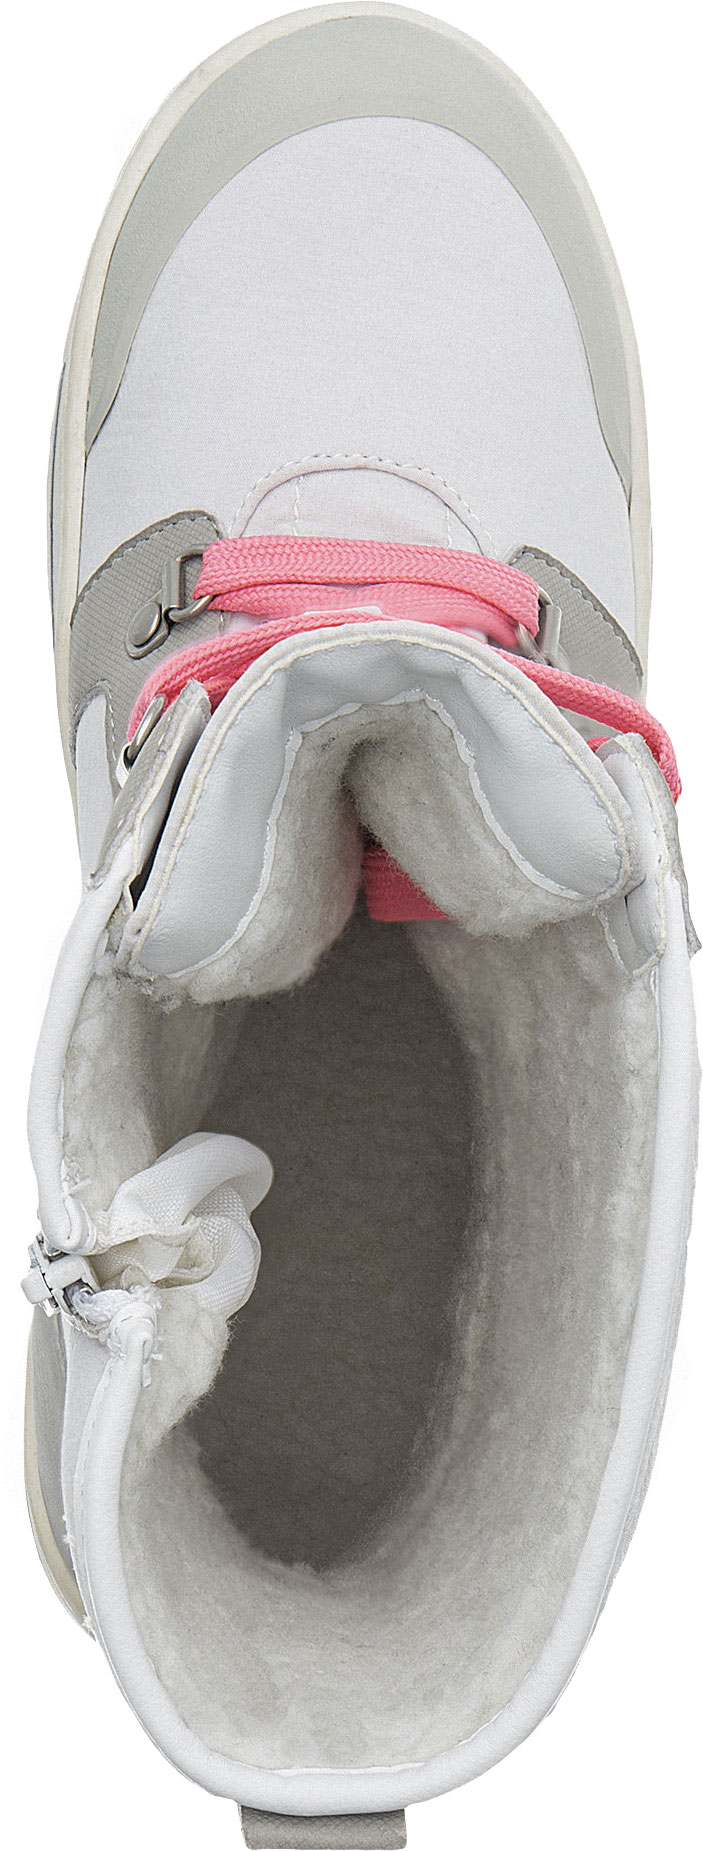 ALBA - Women's Winter Boots